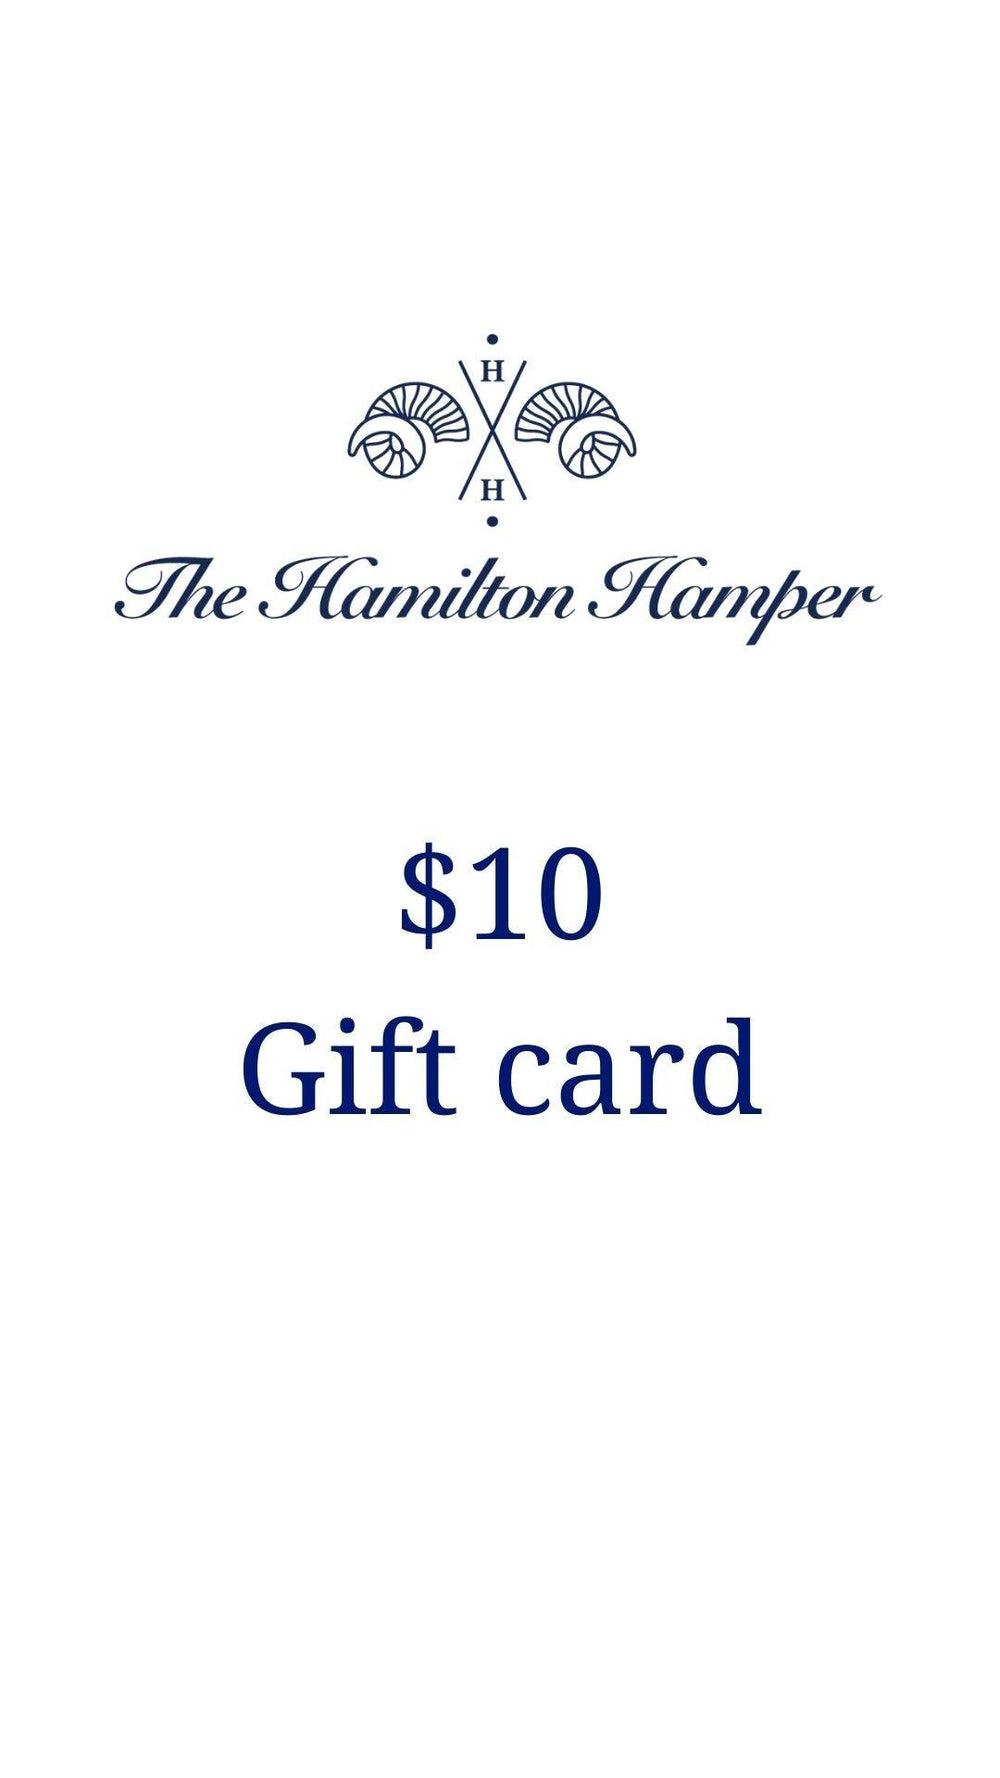 Gift Voucher - The Hamilton Hamper